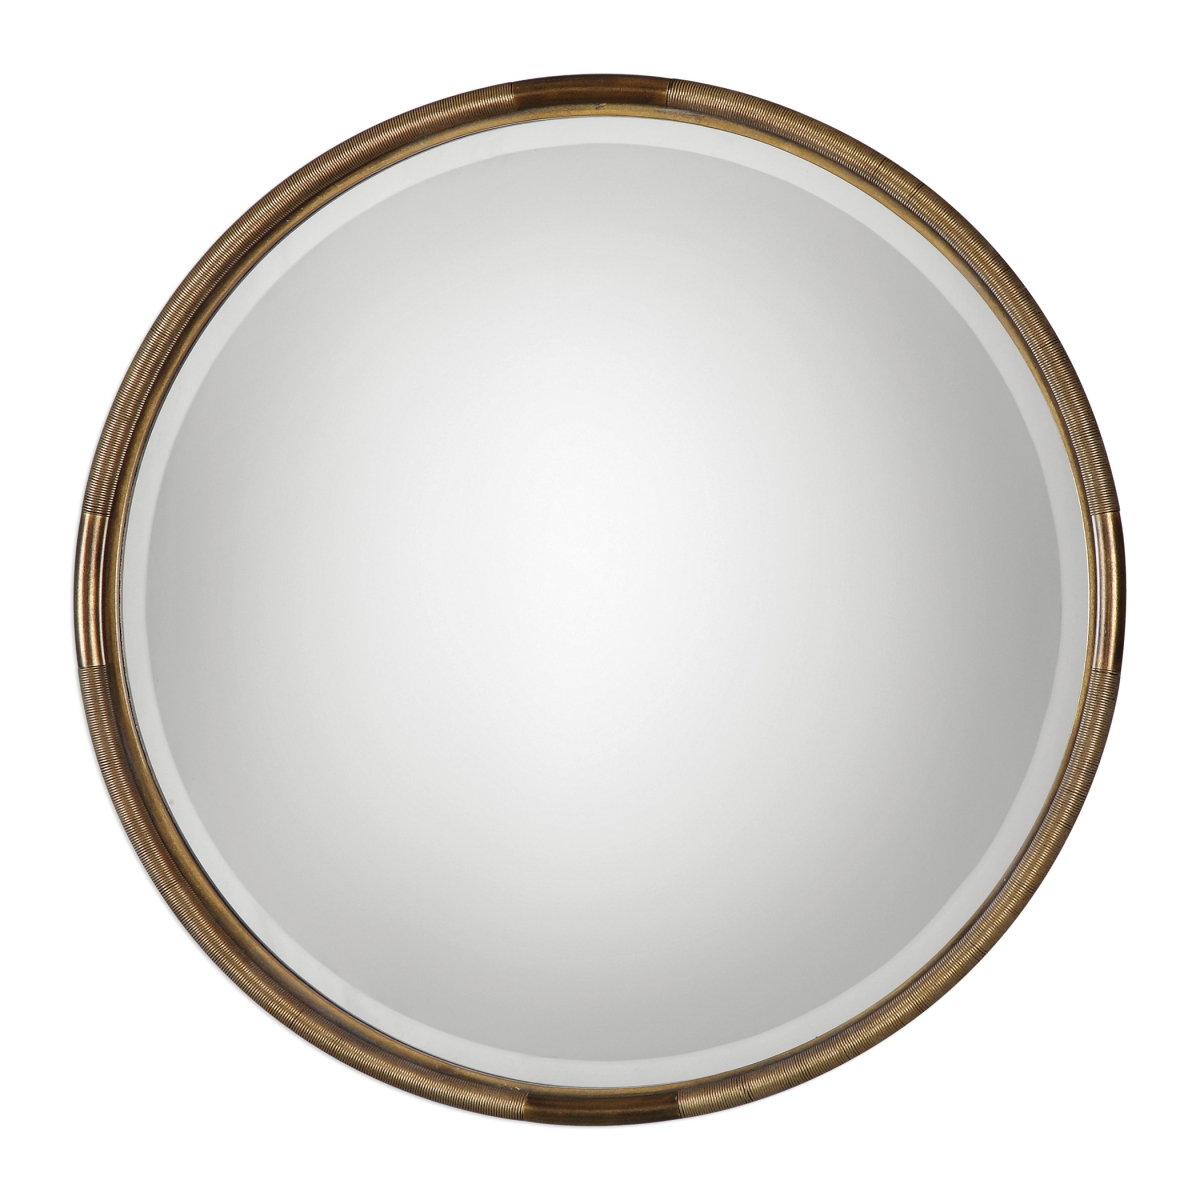 09244 Finnick Iron Coil Round Mirror